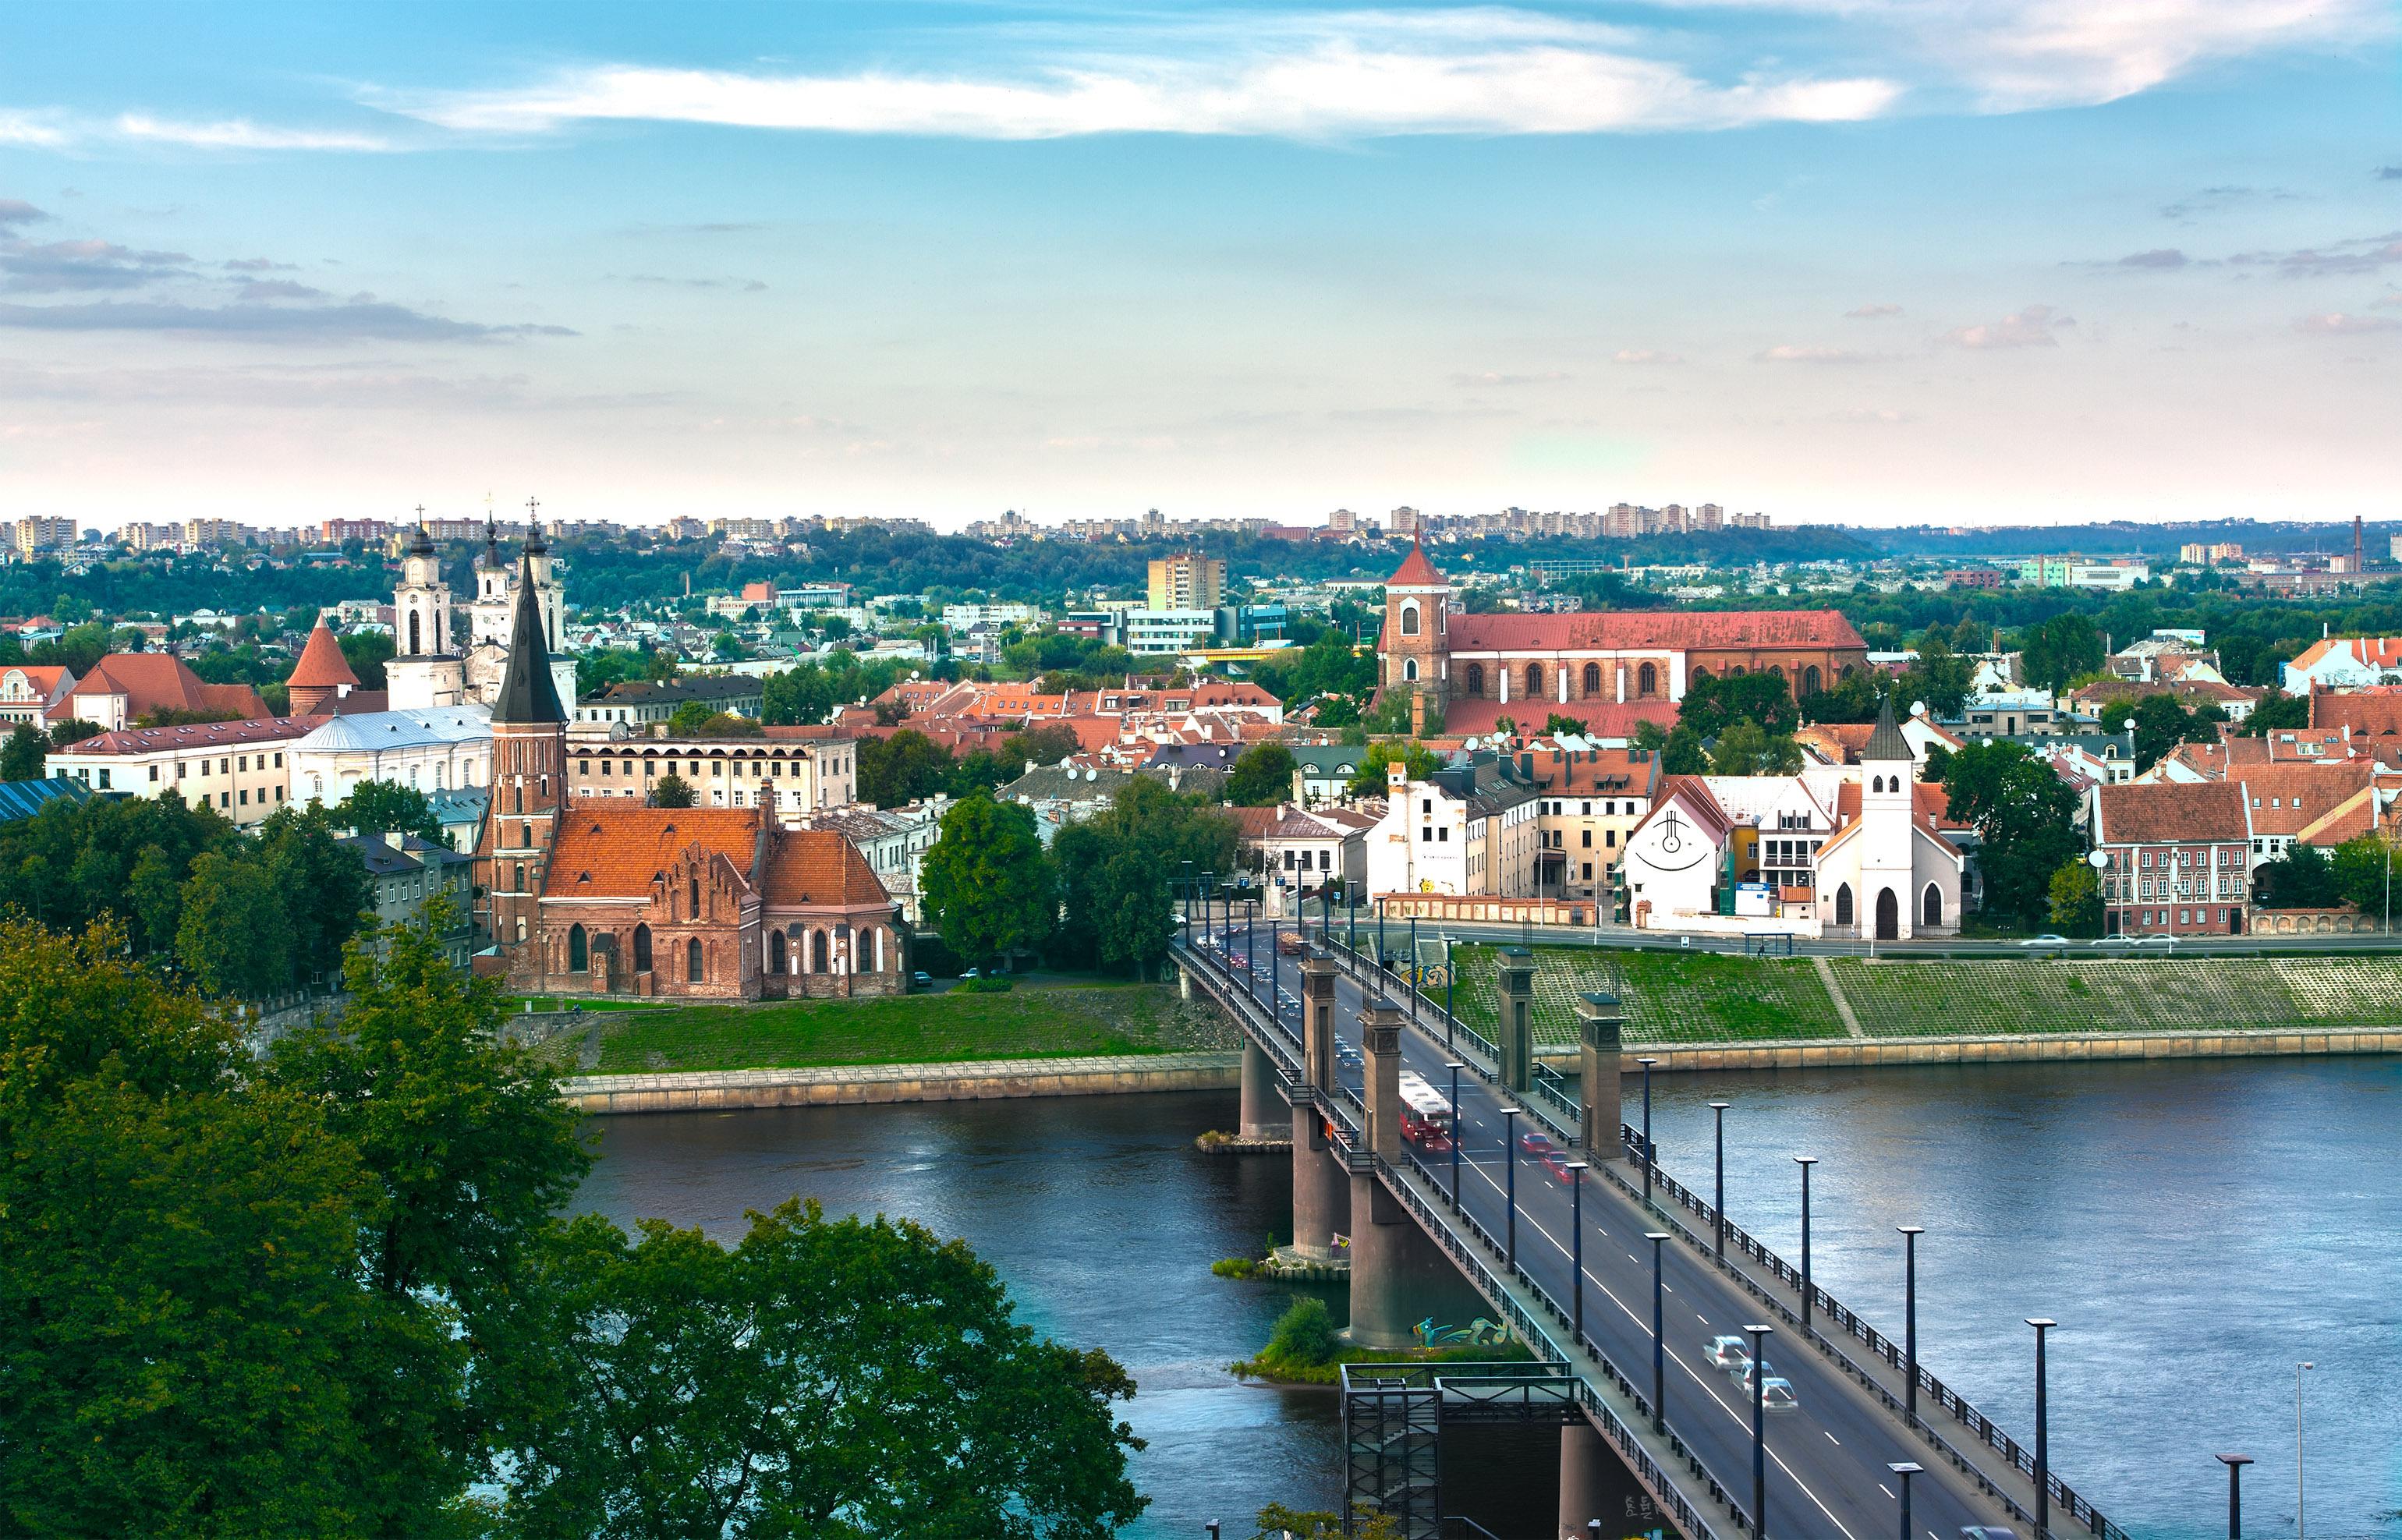 The Kaunas city, cover photo